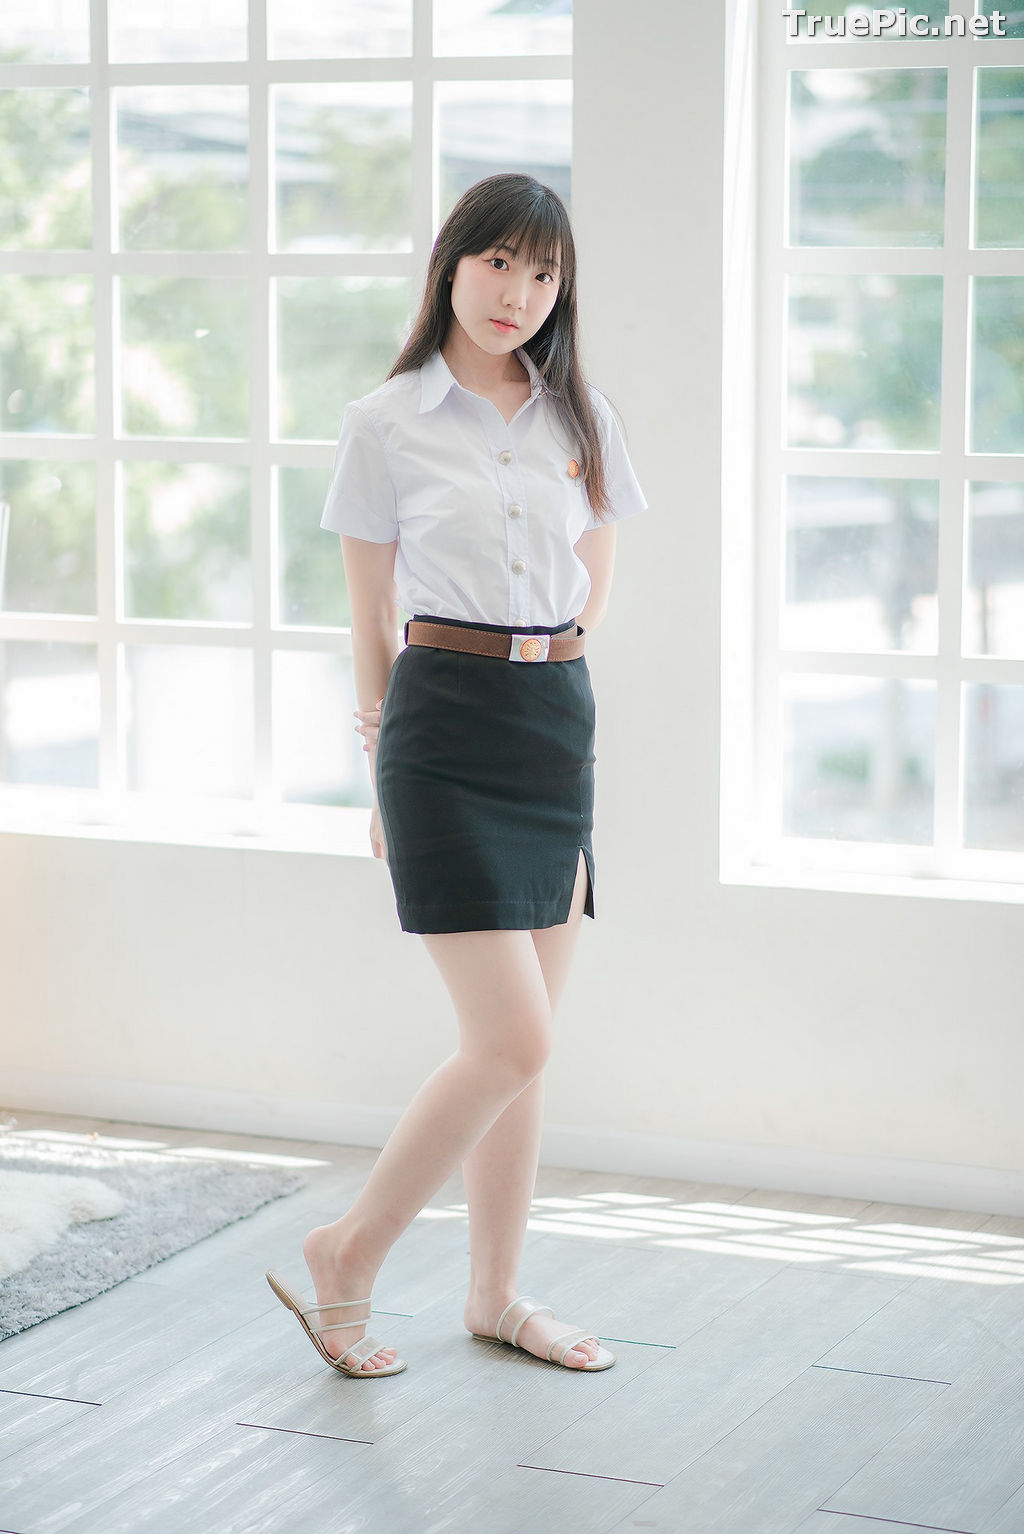 Image Thailand Model - Miki Ariyathanakit - Cute Student Girl - TruePic.net - Picture-11